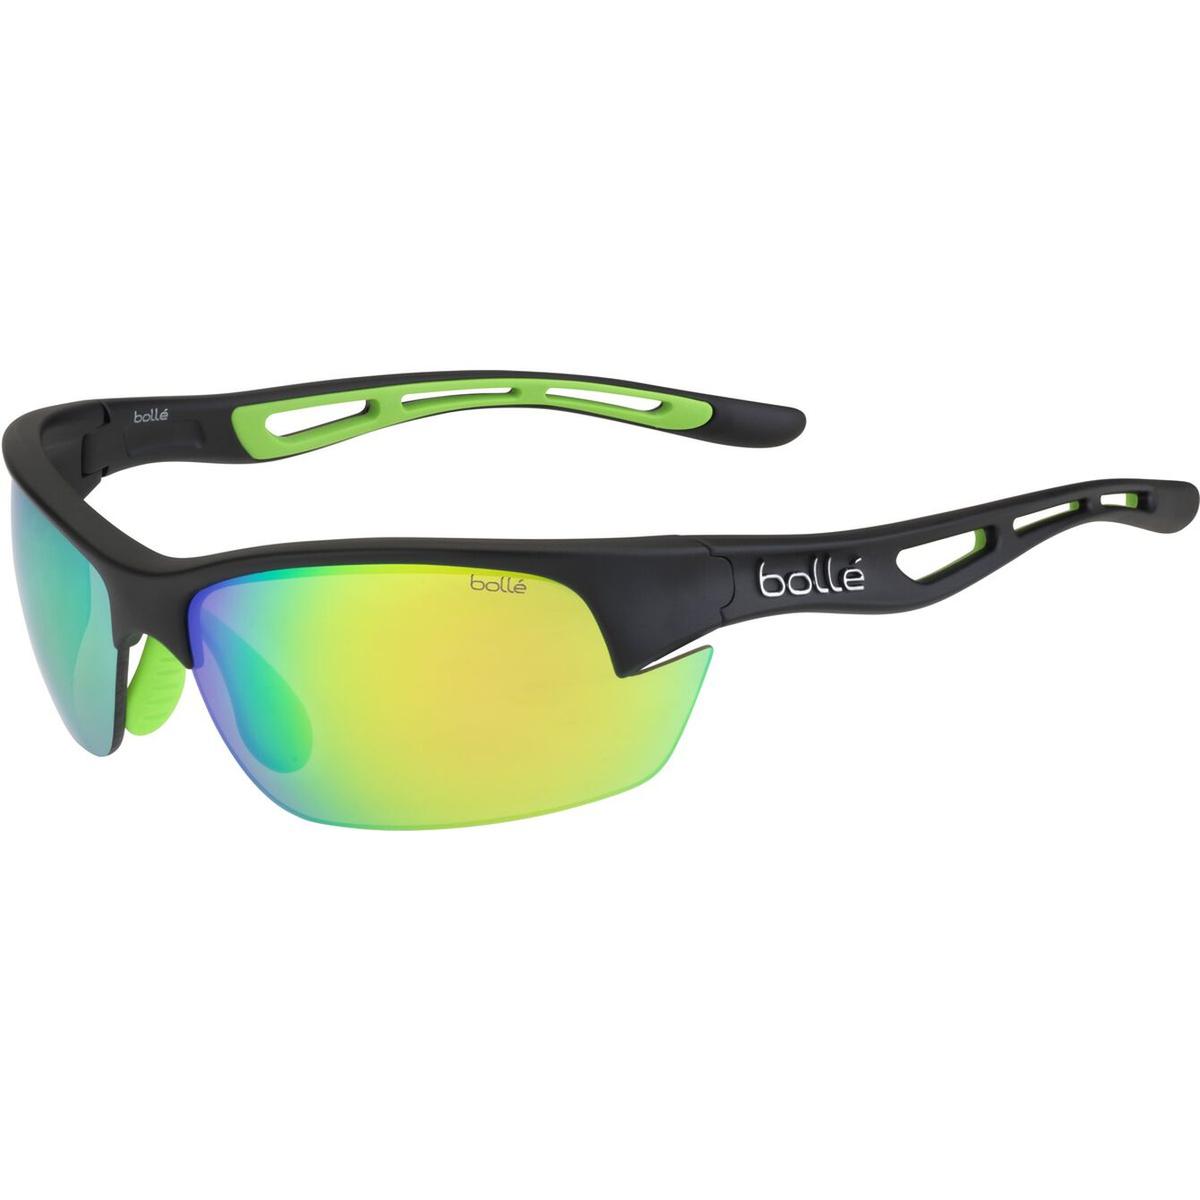 Bolle Bolt Sunglasses